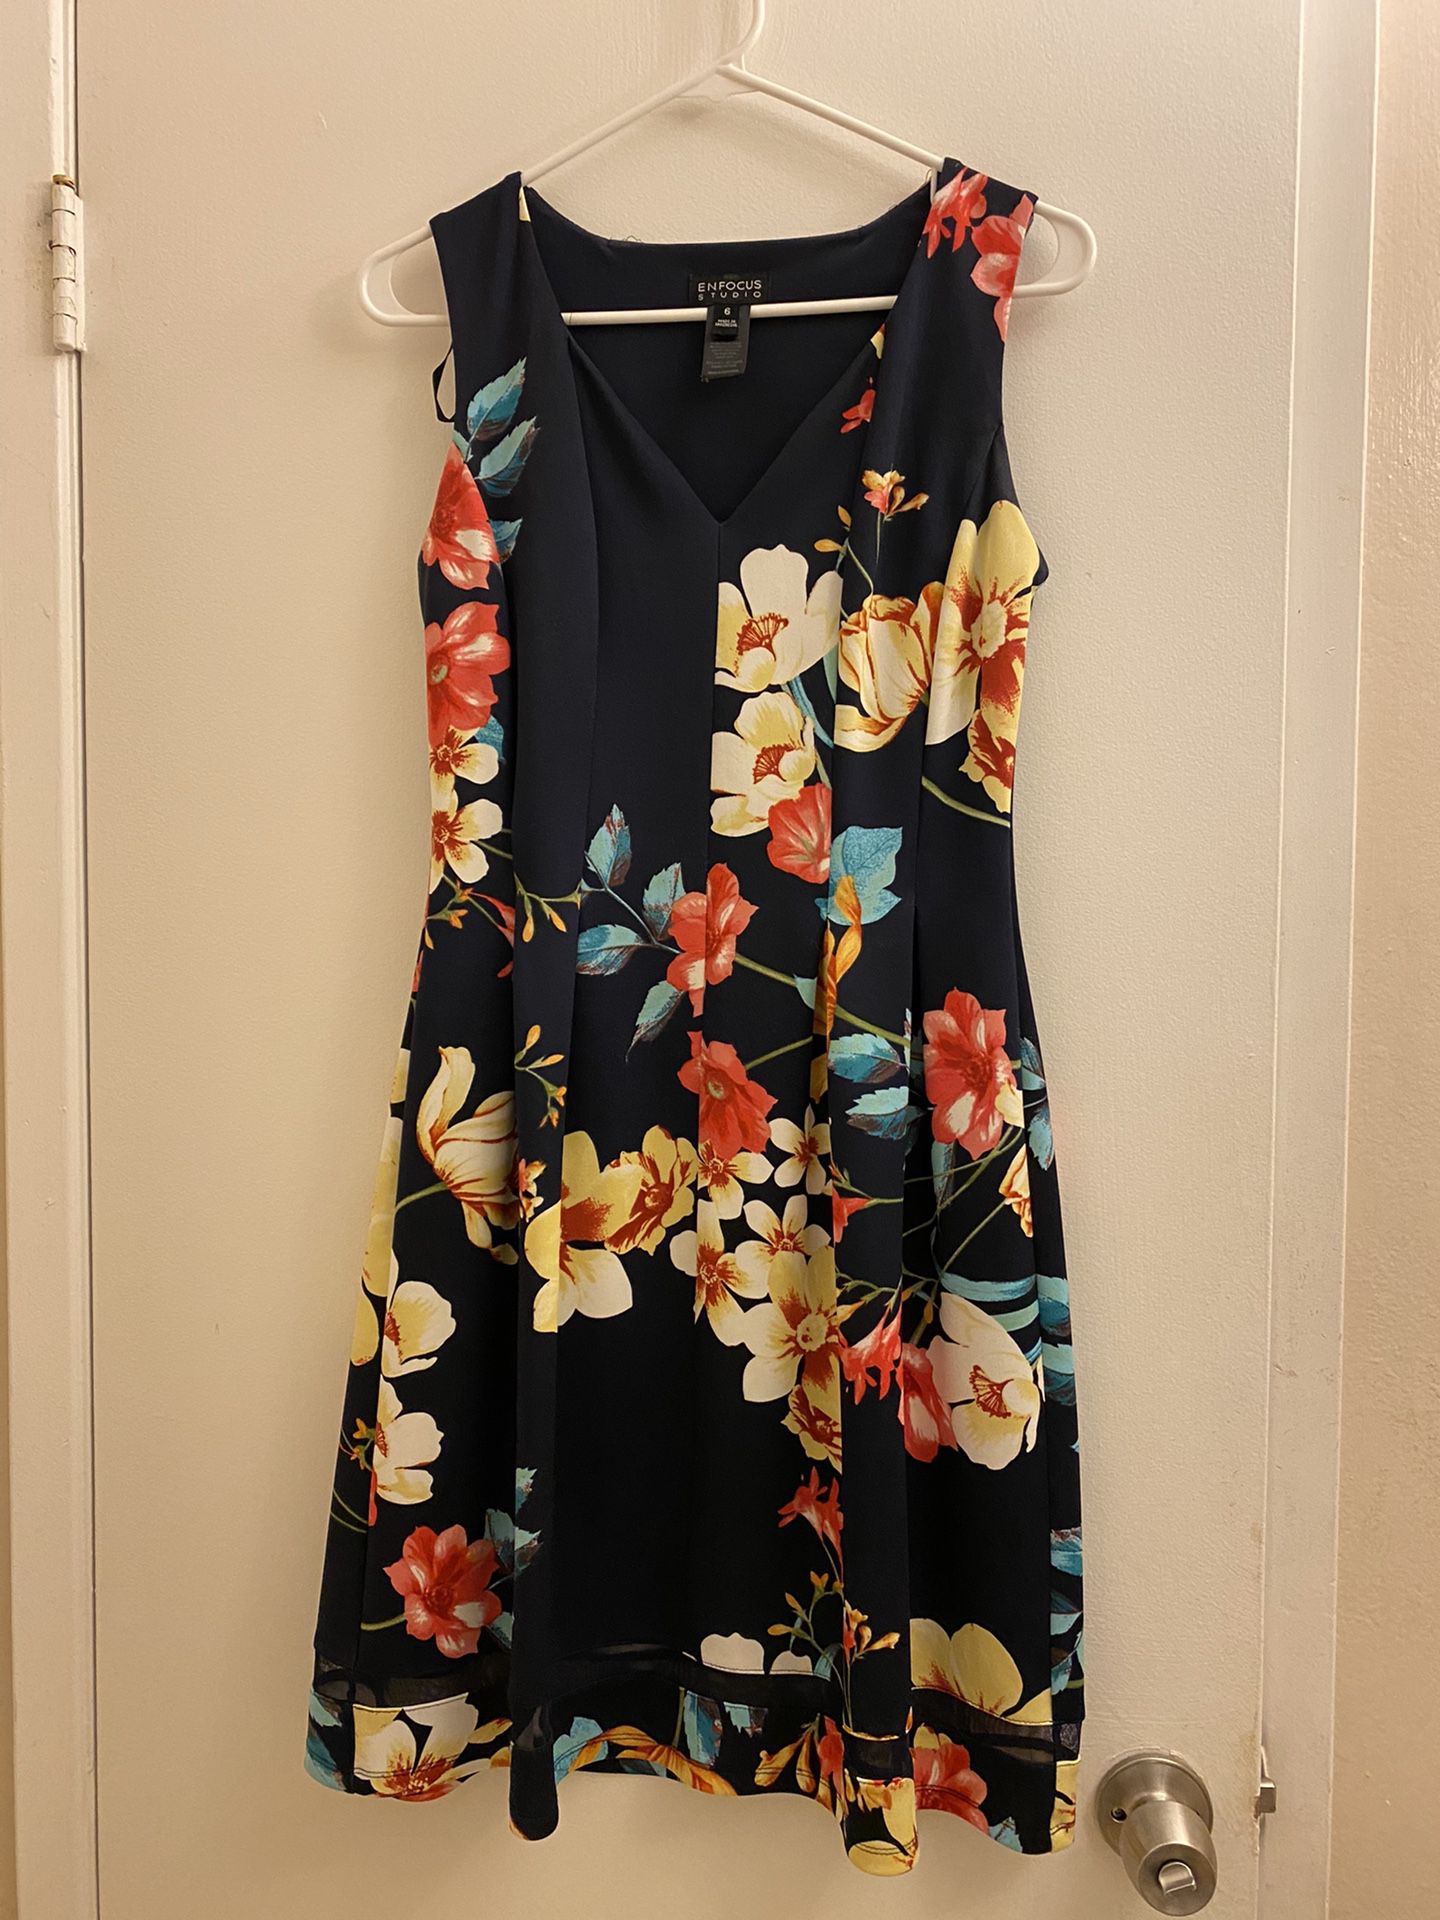 Women’s Floral Dress, Size 6